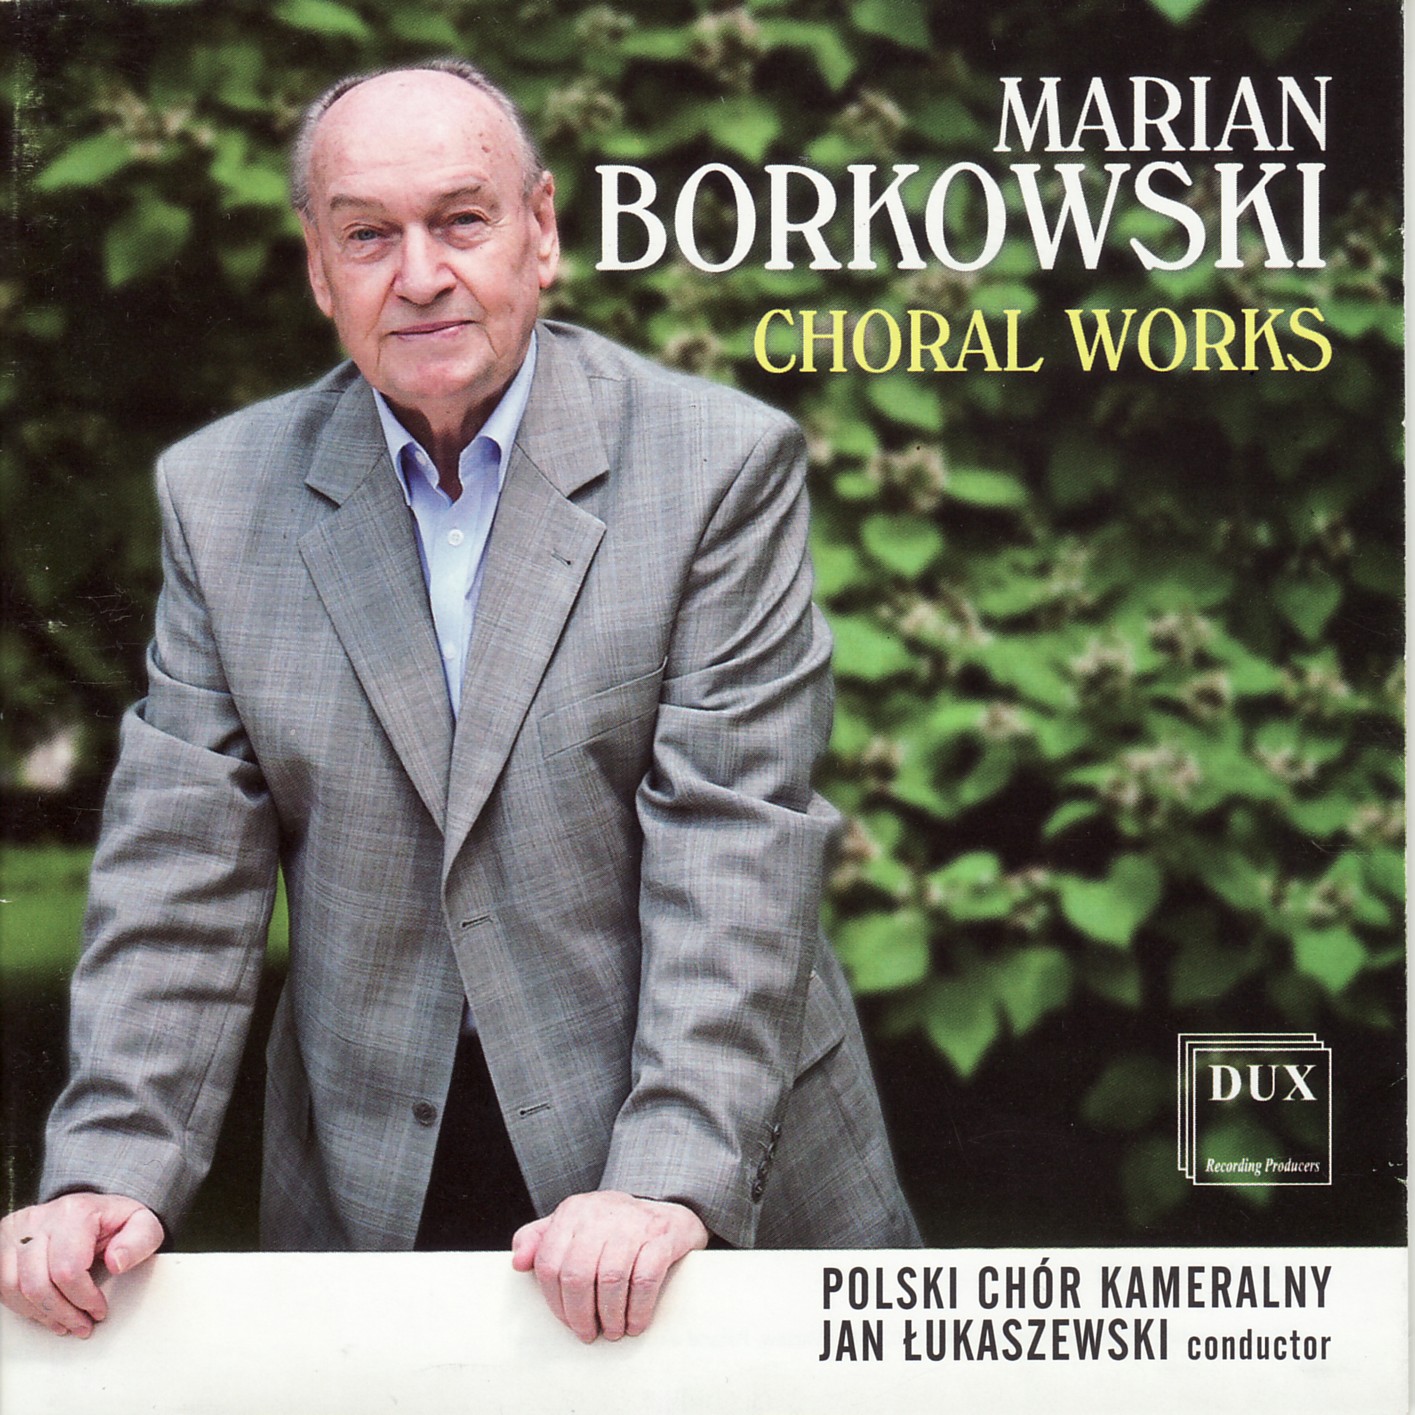 MARIAN BORKOWSKI CHORAL WORKS - FRYDERYK 2014